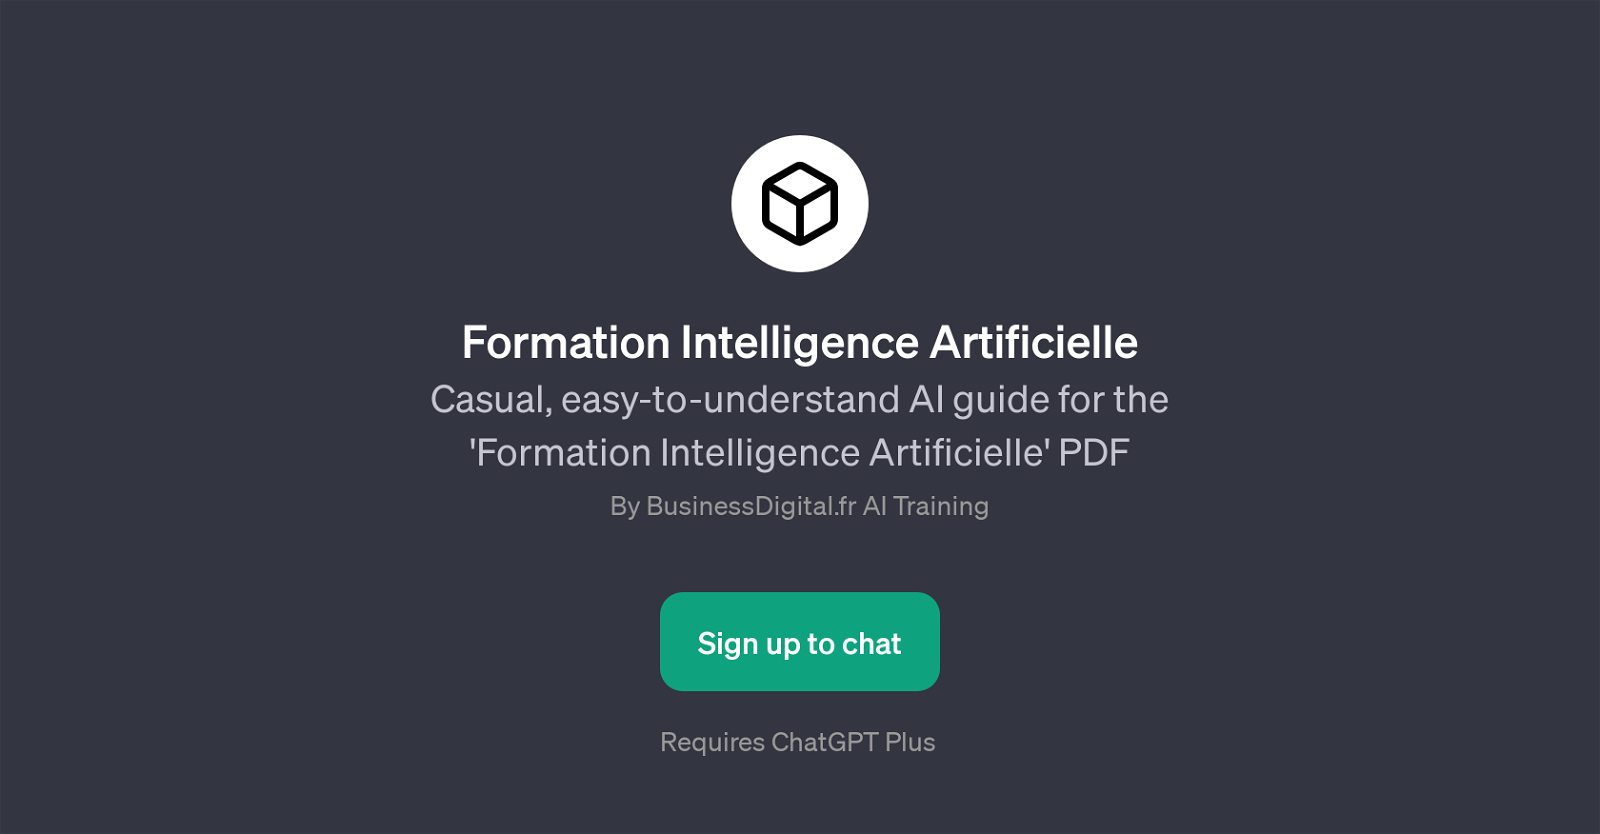 Formation Intelligence Artificielle website